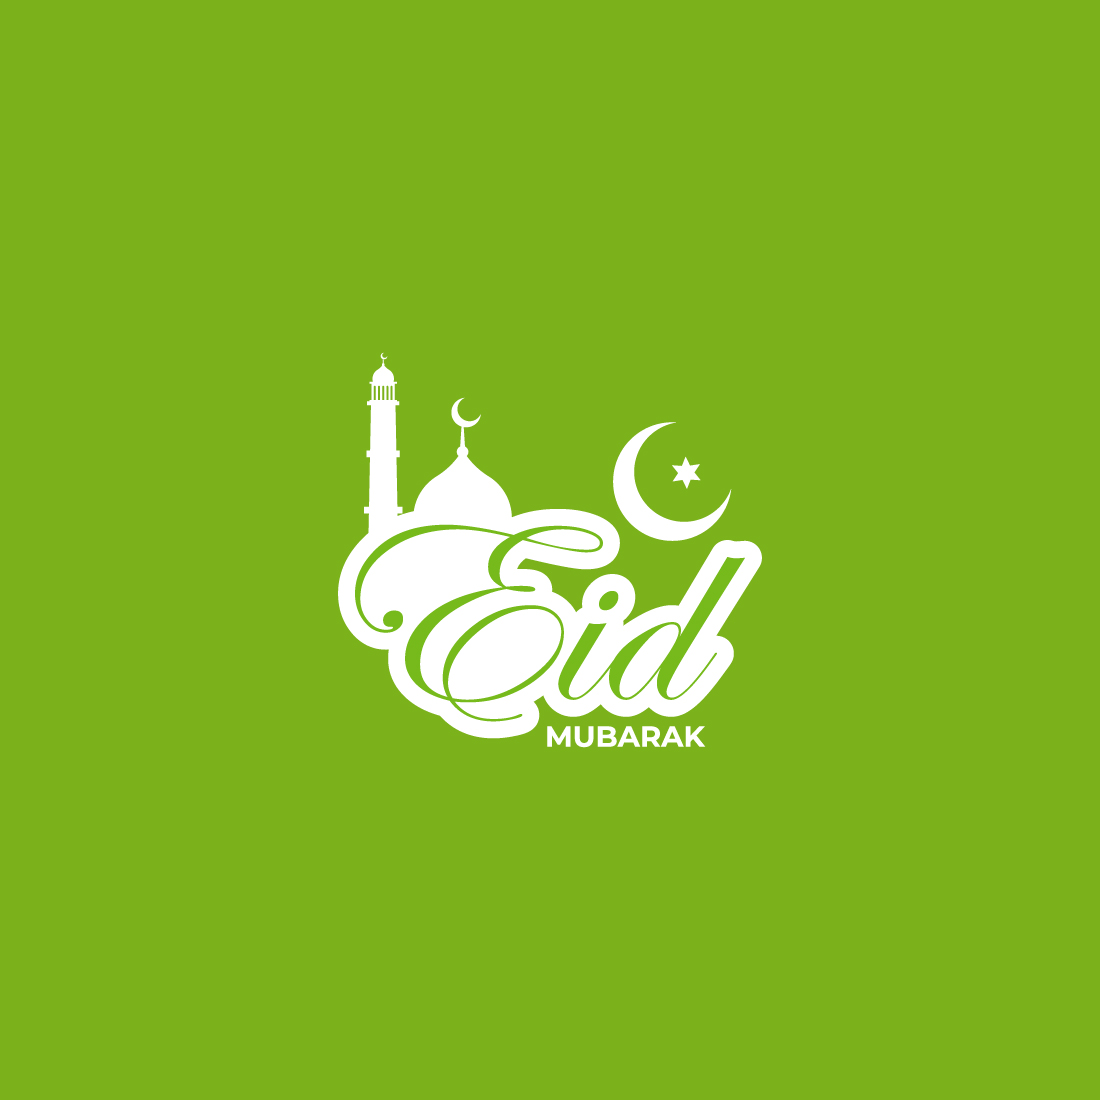 Eid Ul Adha Mubarak Media Post Design, Islamic festival background design preview image.